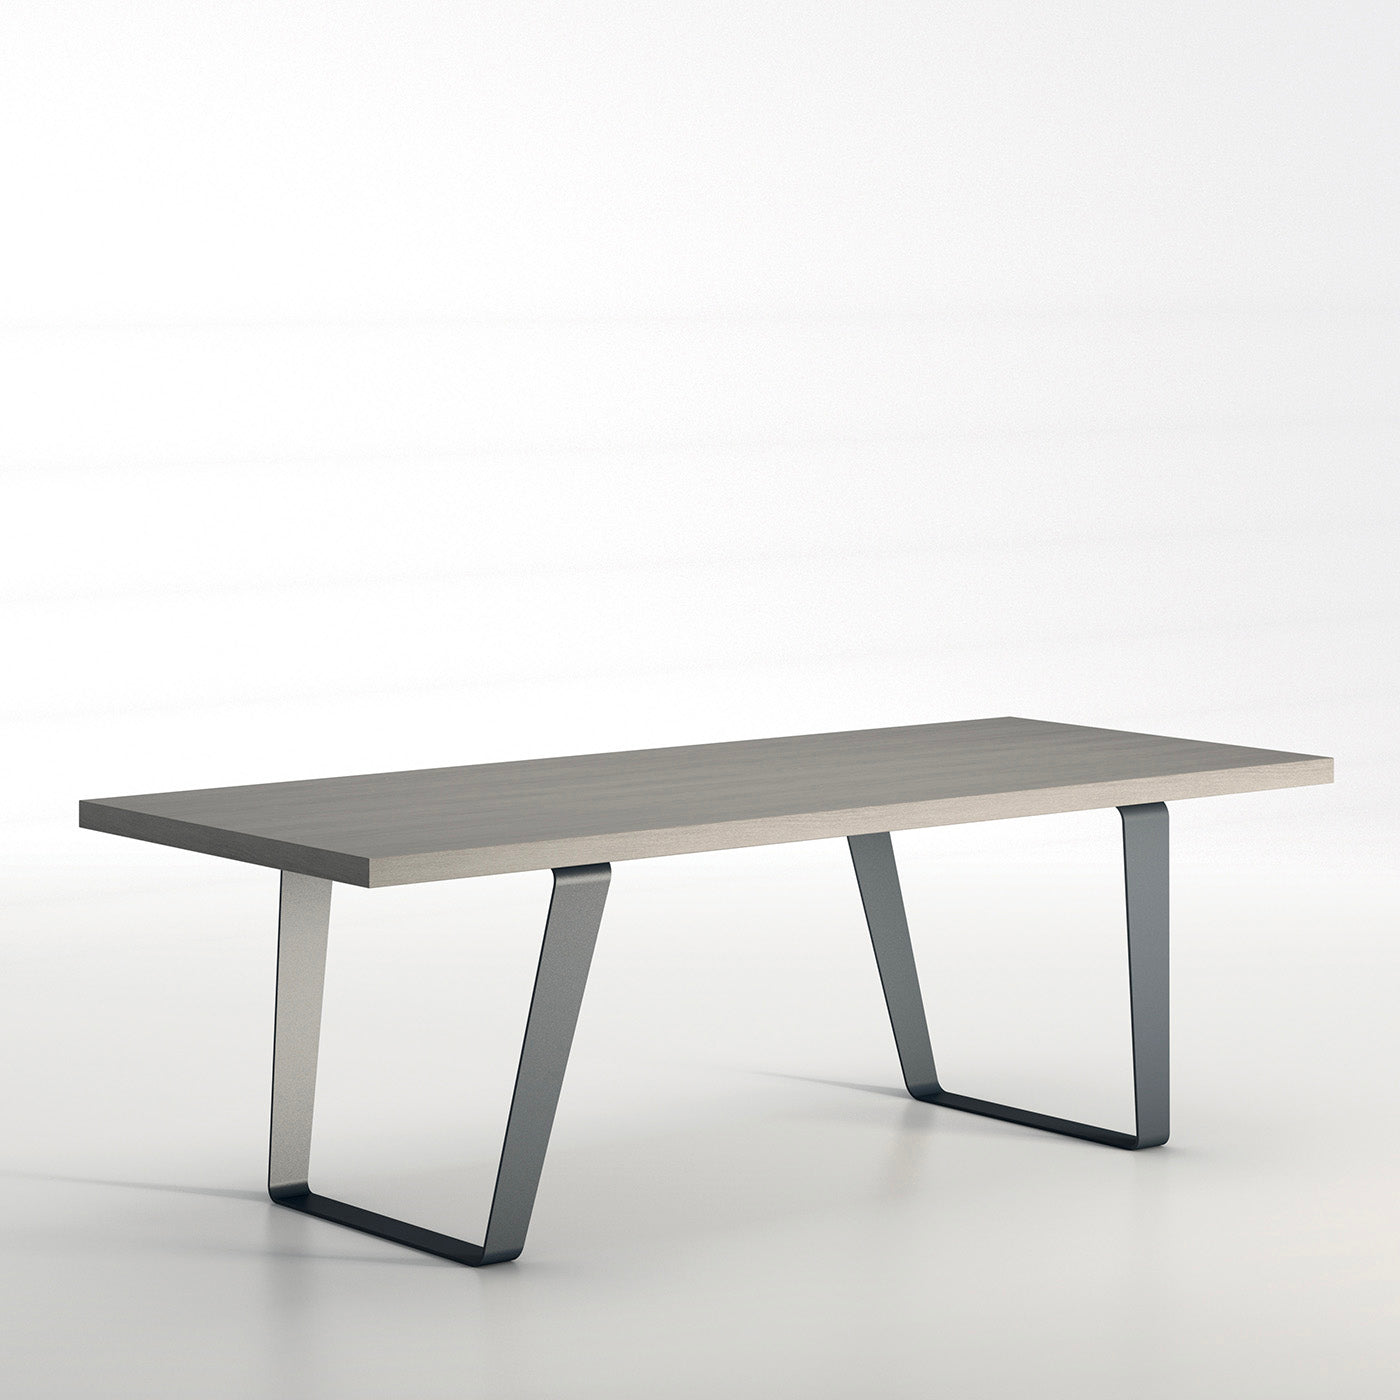 Japan Rectangular Steel Table by Franco Poli - Alternative view 1